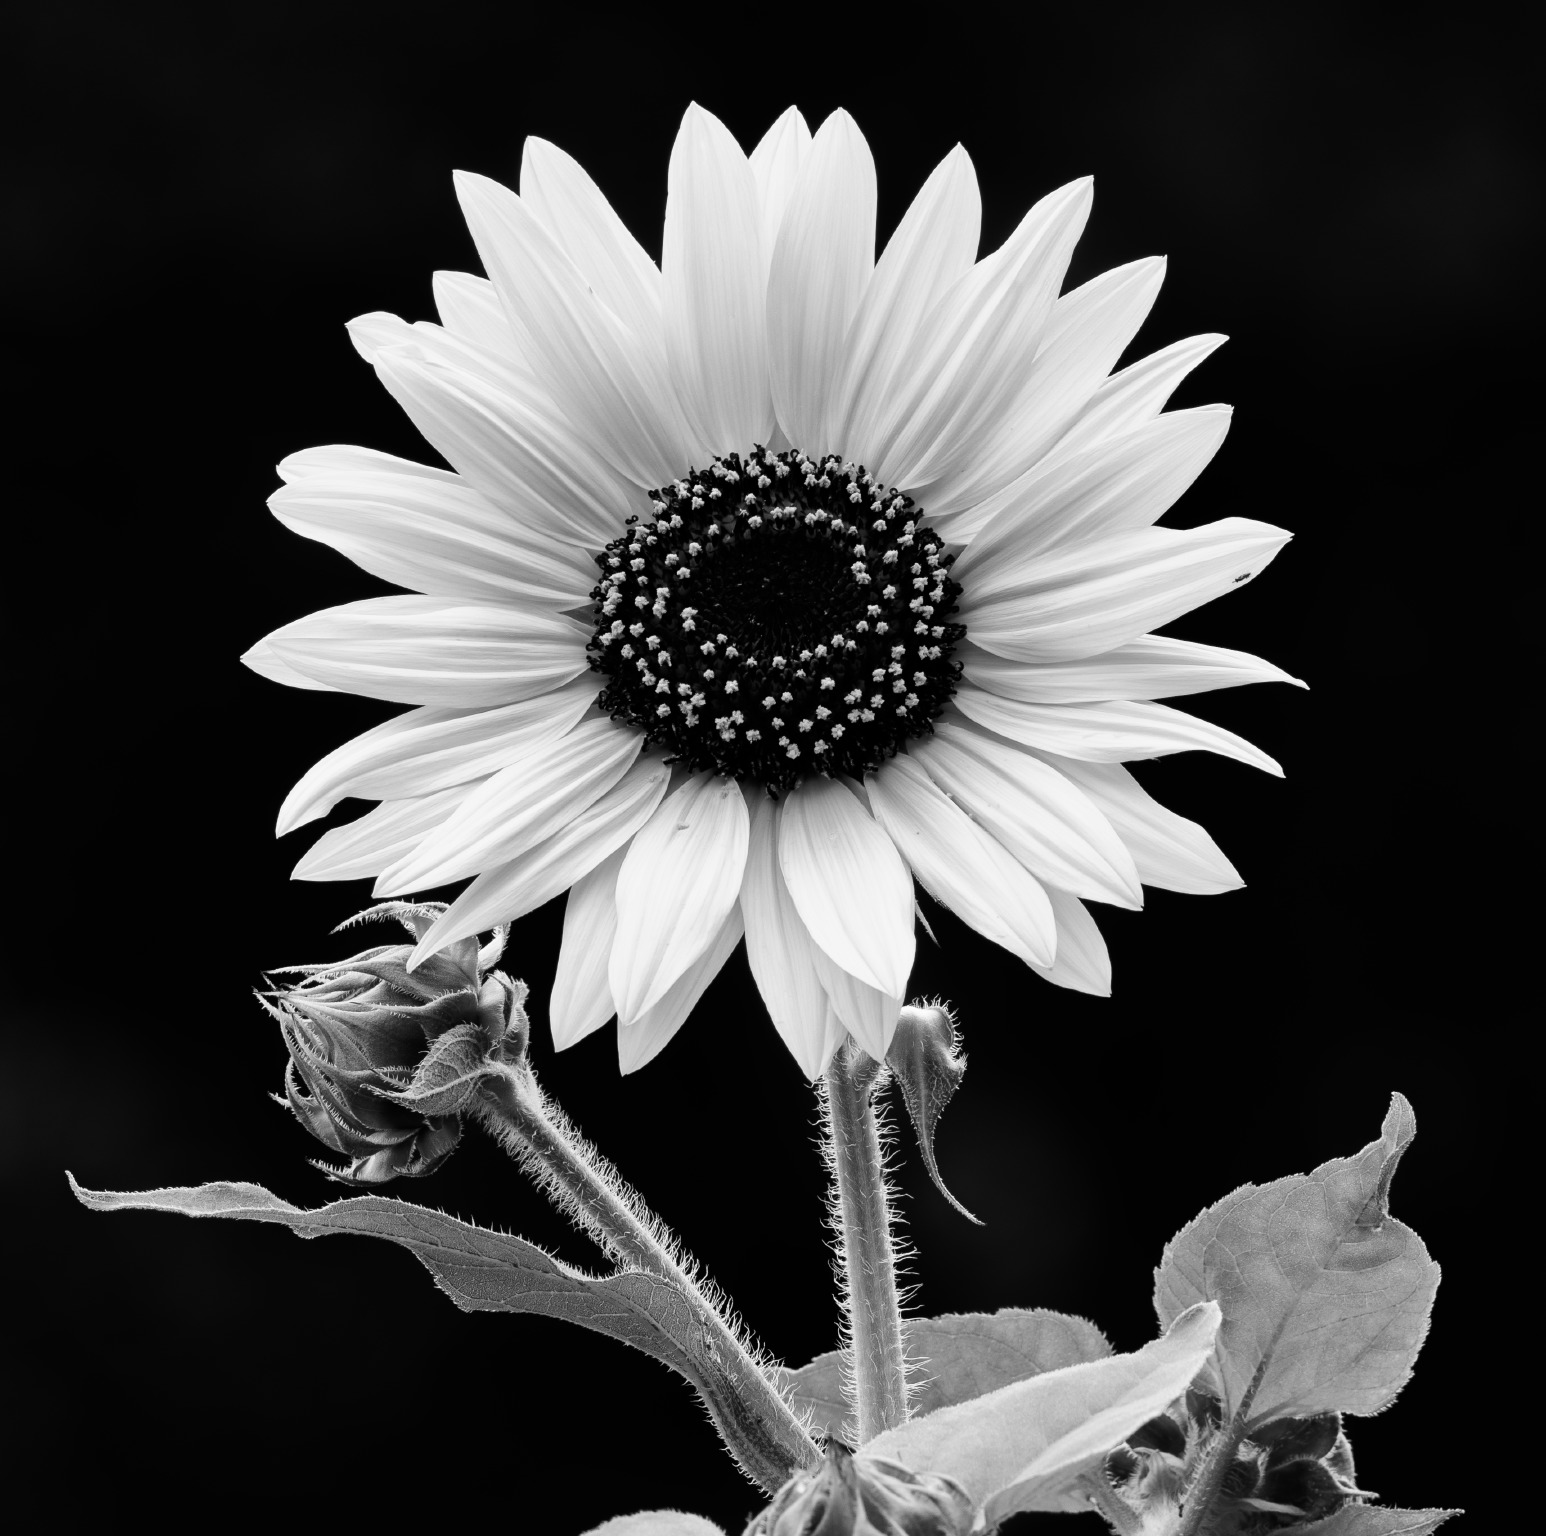 Sunflower by Renn Lawrence